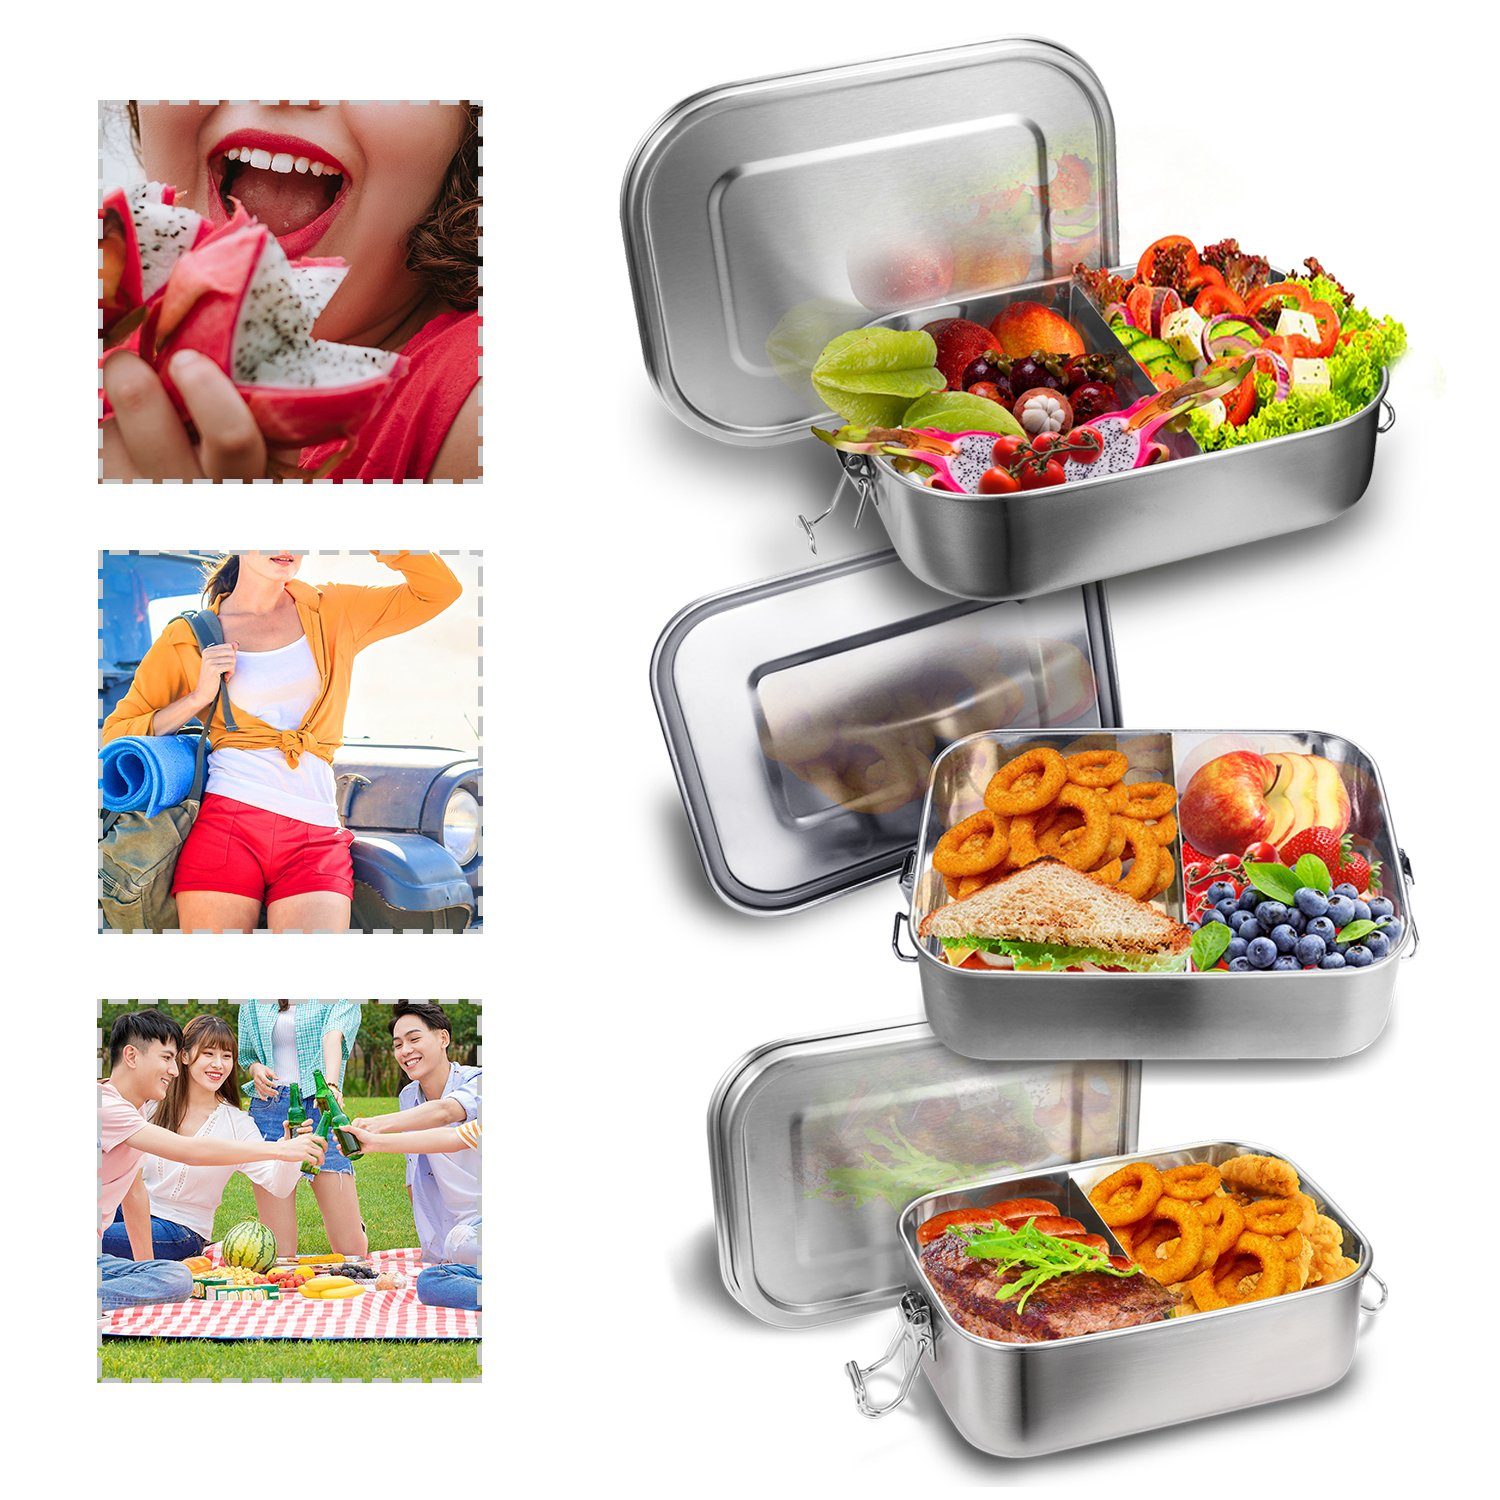 Lunchbox 800-1400ml Fächern 800+1200+1400ml frei Silber Edelstahl, BPA Brotdose Metall Lunchbox Brotdose (abnehmbar) Thermobehälter Clanmacy